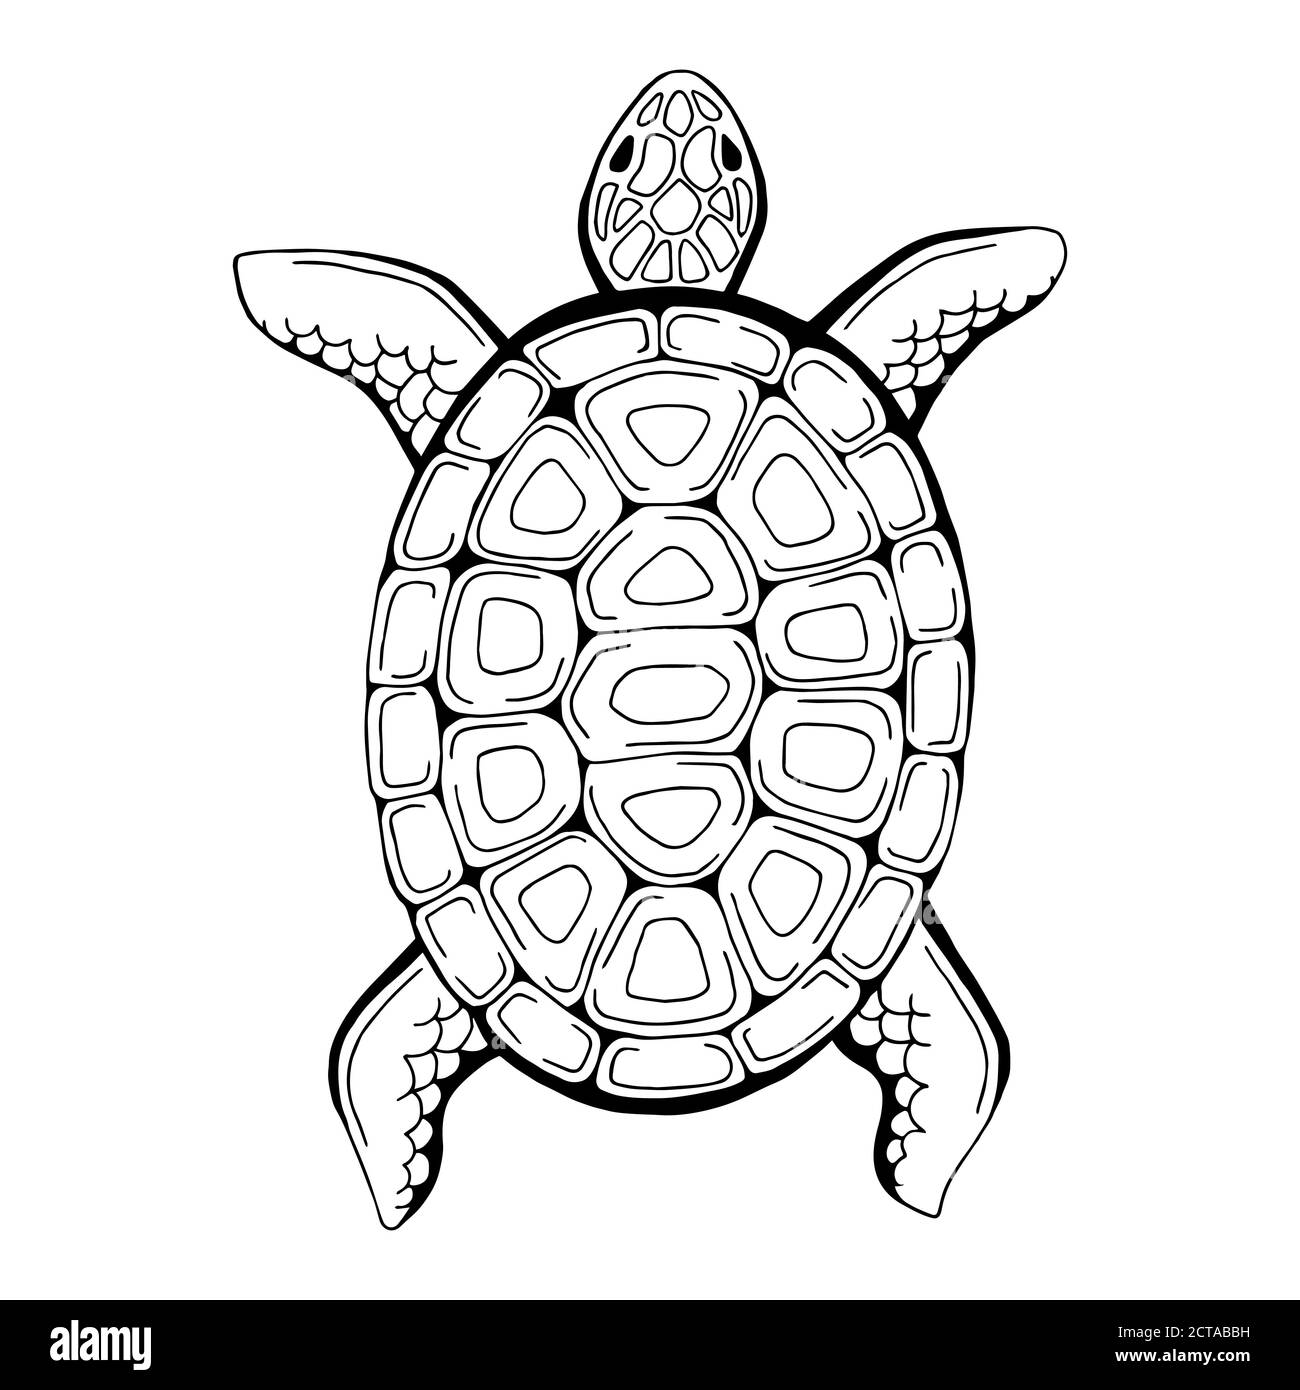 Tartaruga animale grafico nero bianco isolato illustrazione vettore Illustrazione Vettoriale